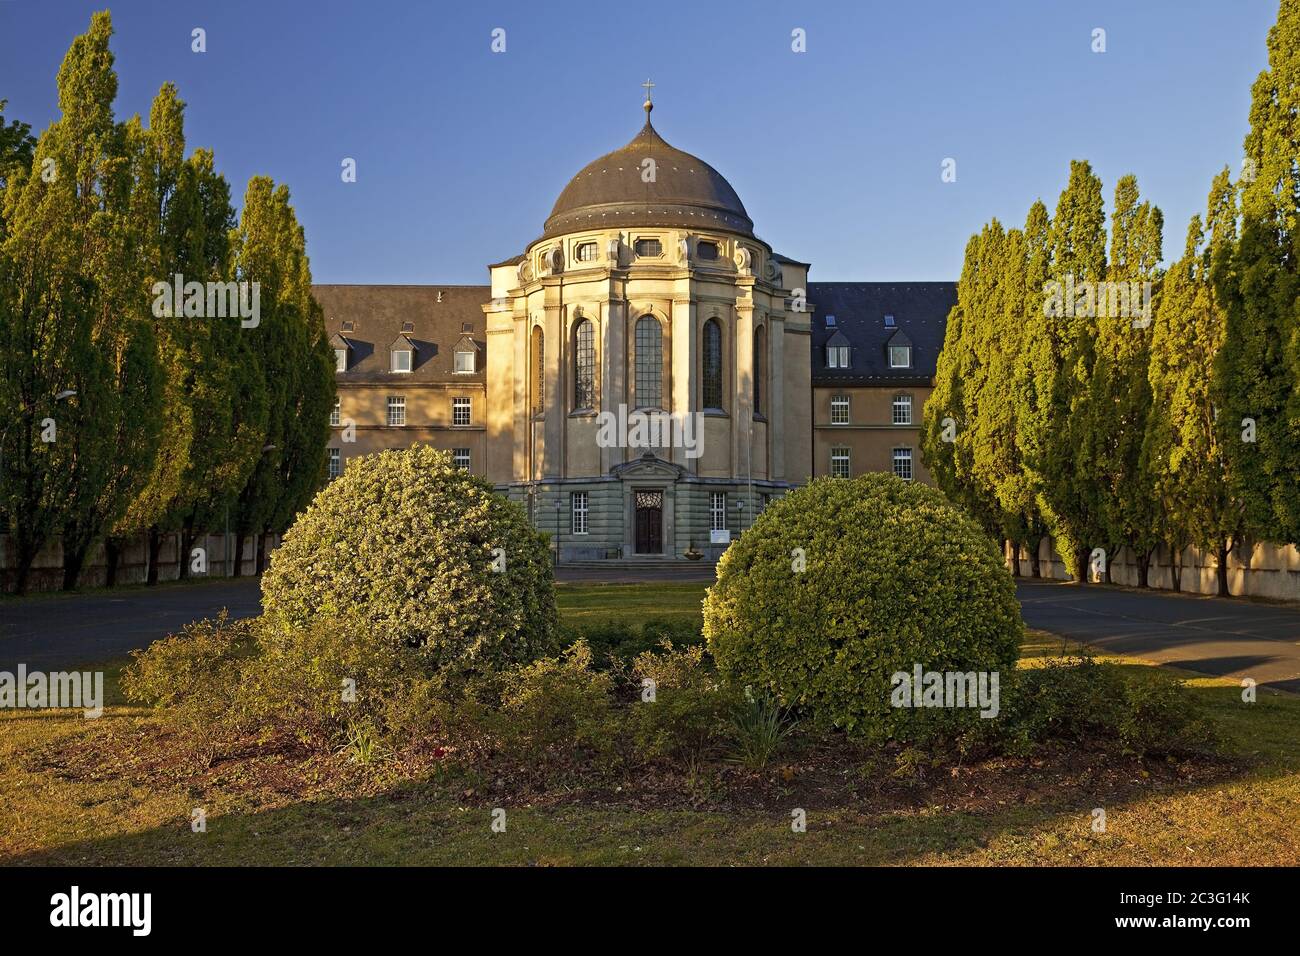 Mission house of the Steyler missionaries, Sankt Augustin, North Rhine-Westphalia, Germany, Europe Stock Photo